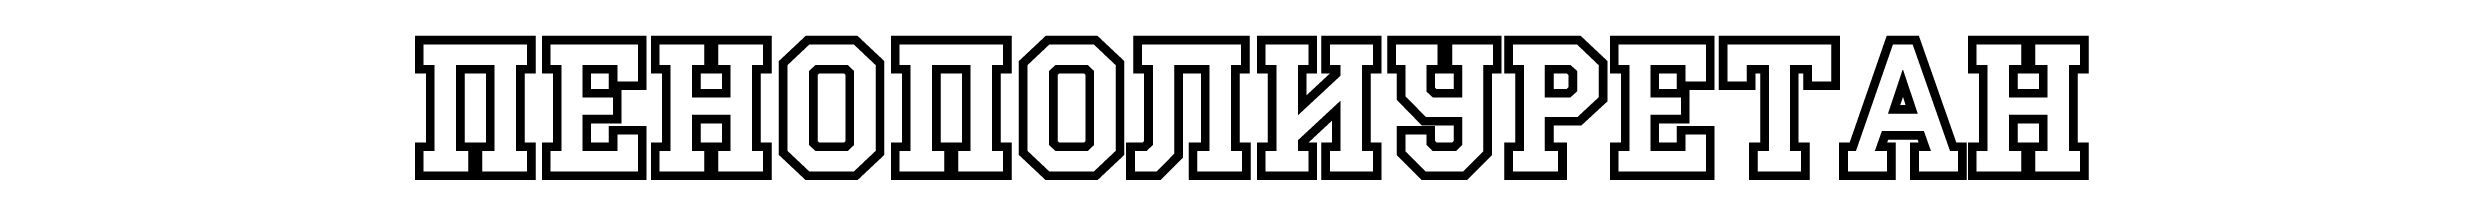 пенополиуретан лого